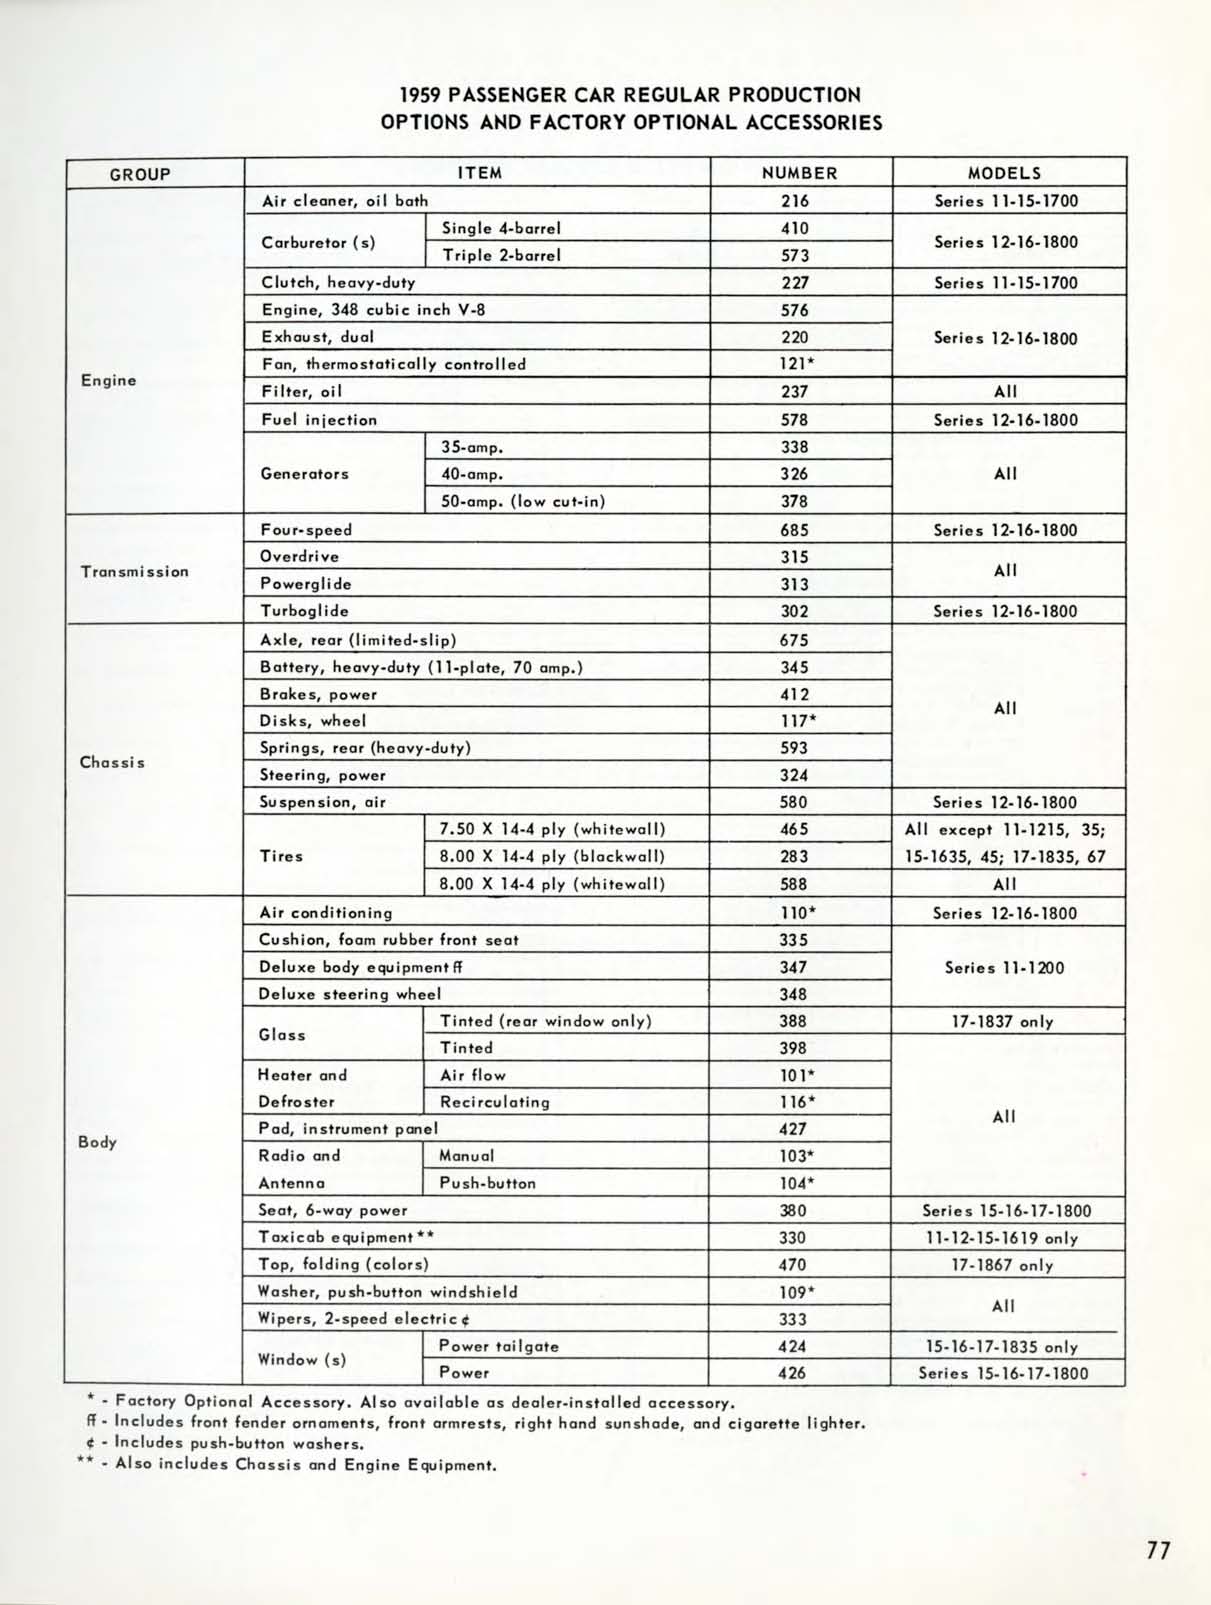 1959_Chevrolet_Engineering_Features-77